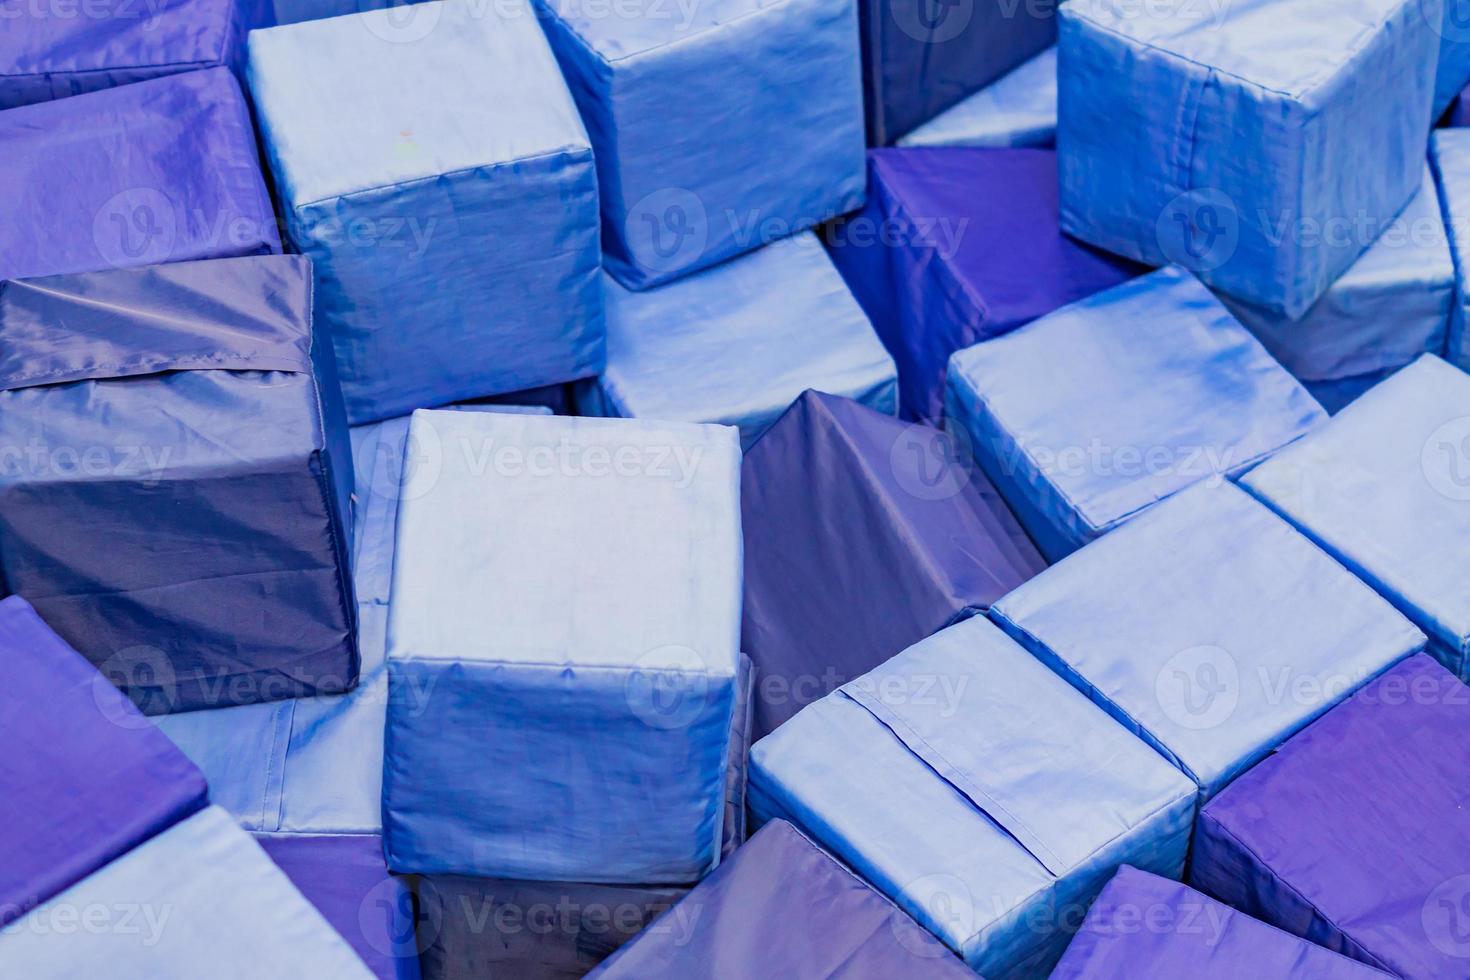 Plenty of soft blue blocks in a kids' dry pool at playground. geometric toys. photo